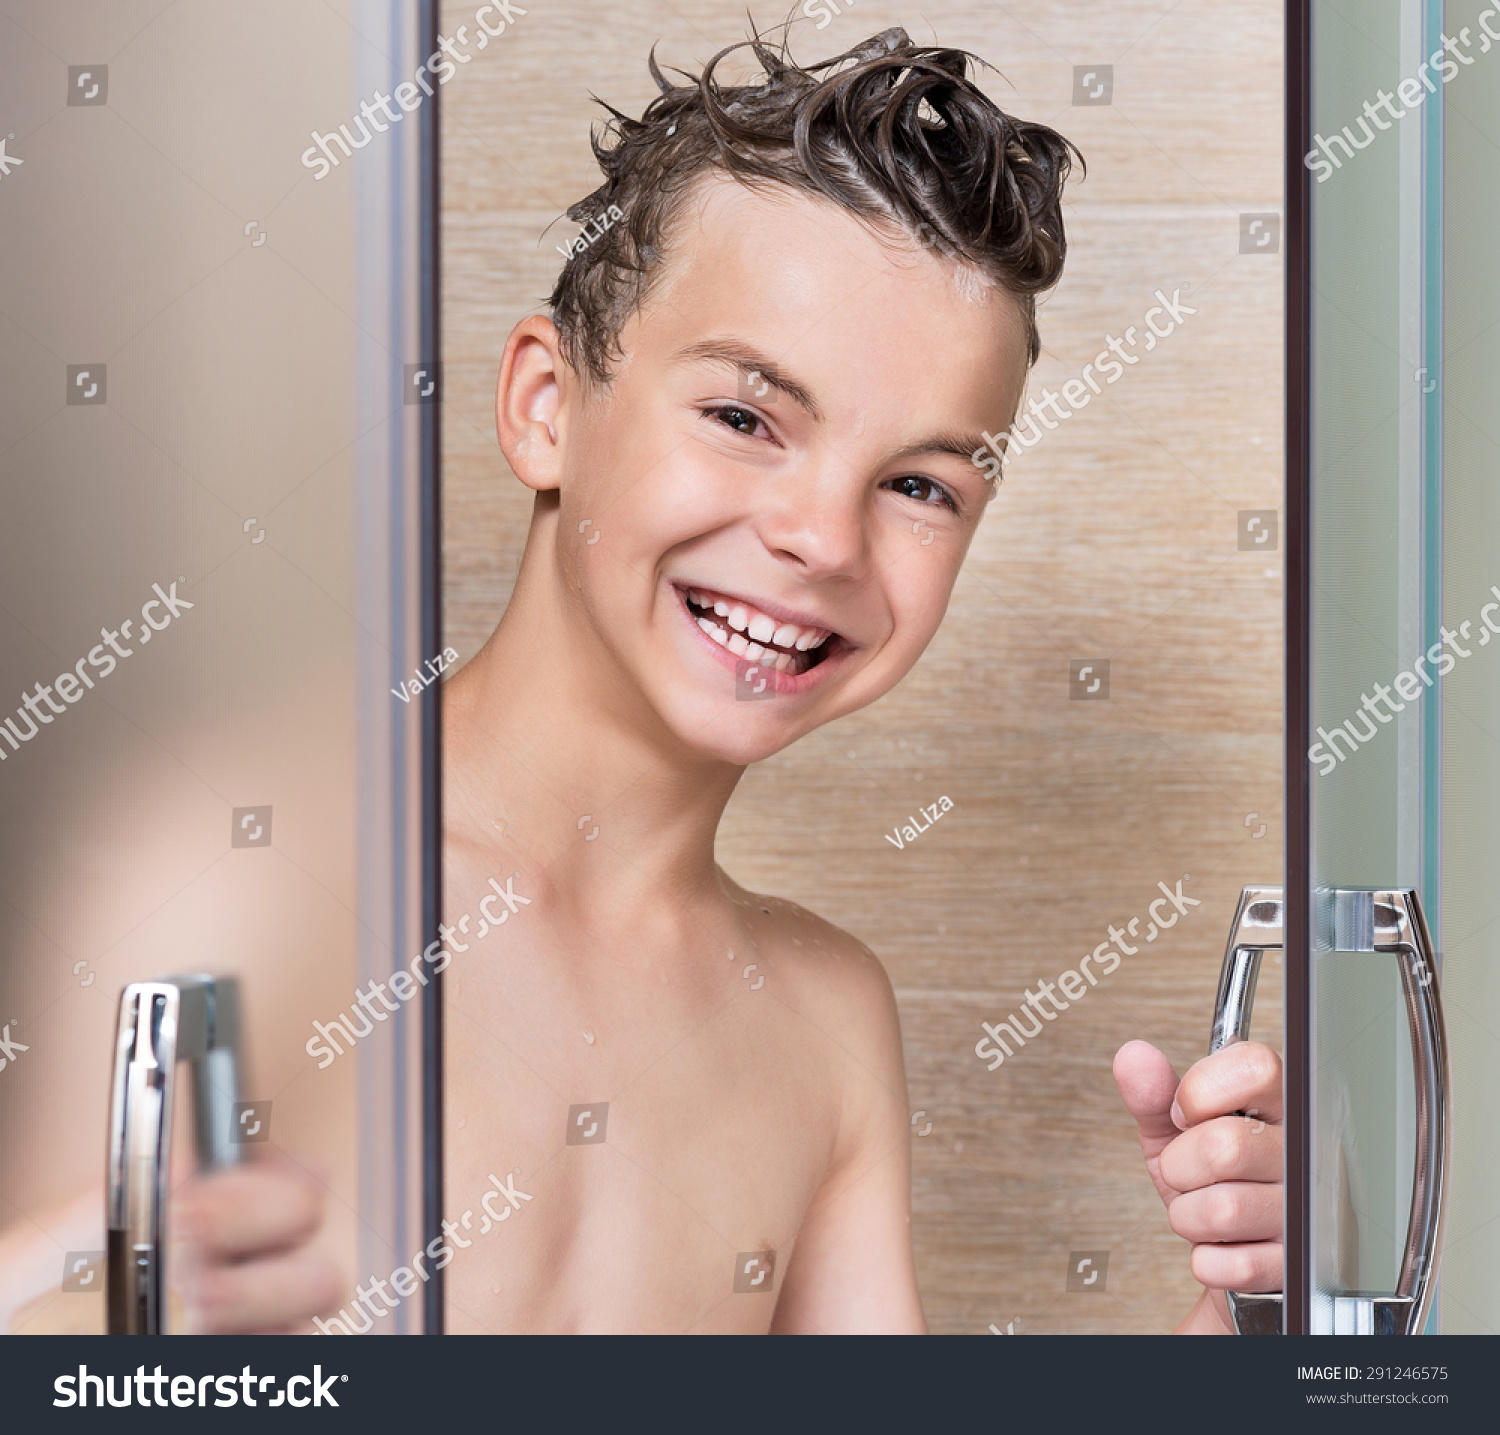 Gay Porn In Shower 97